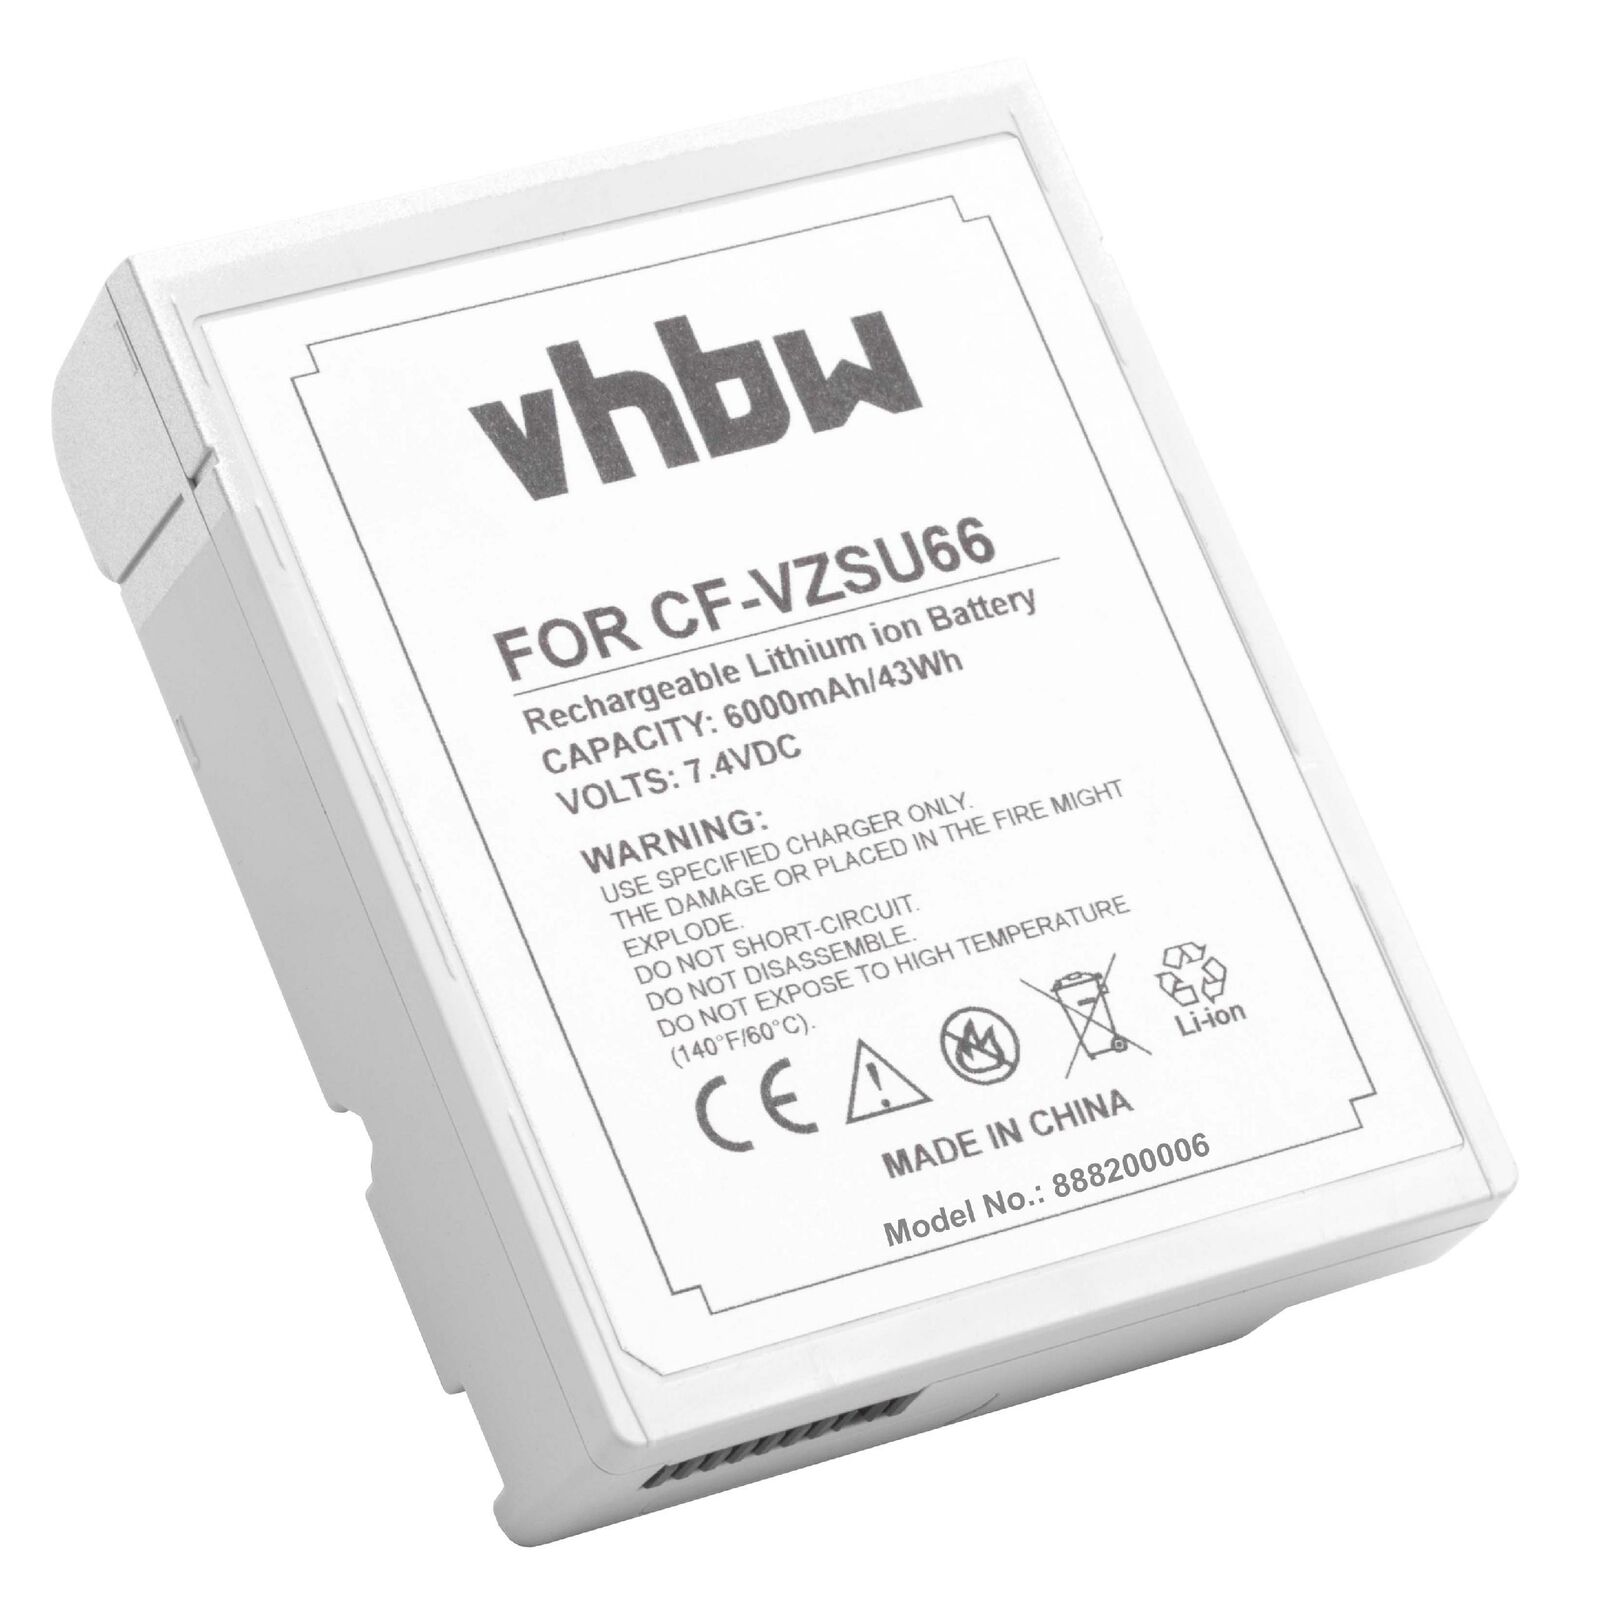 Batterie pour CF-VZSU66U Panasonic CF-C1 MK1 MK2 CF-C1MDB21 CF-C1BWFAZ1M C1BTFAG1M(compatible)